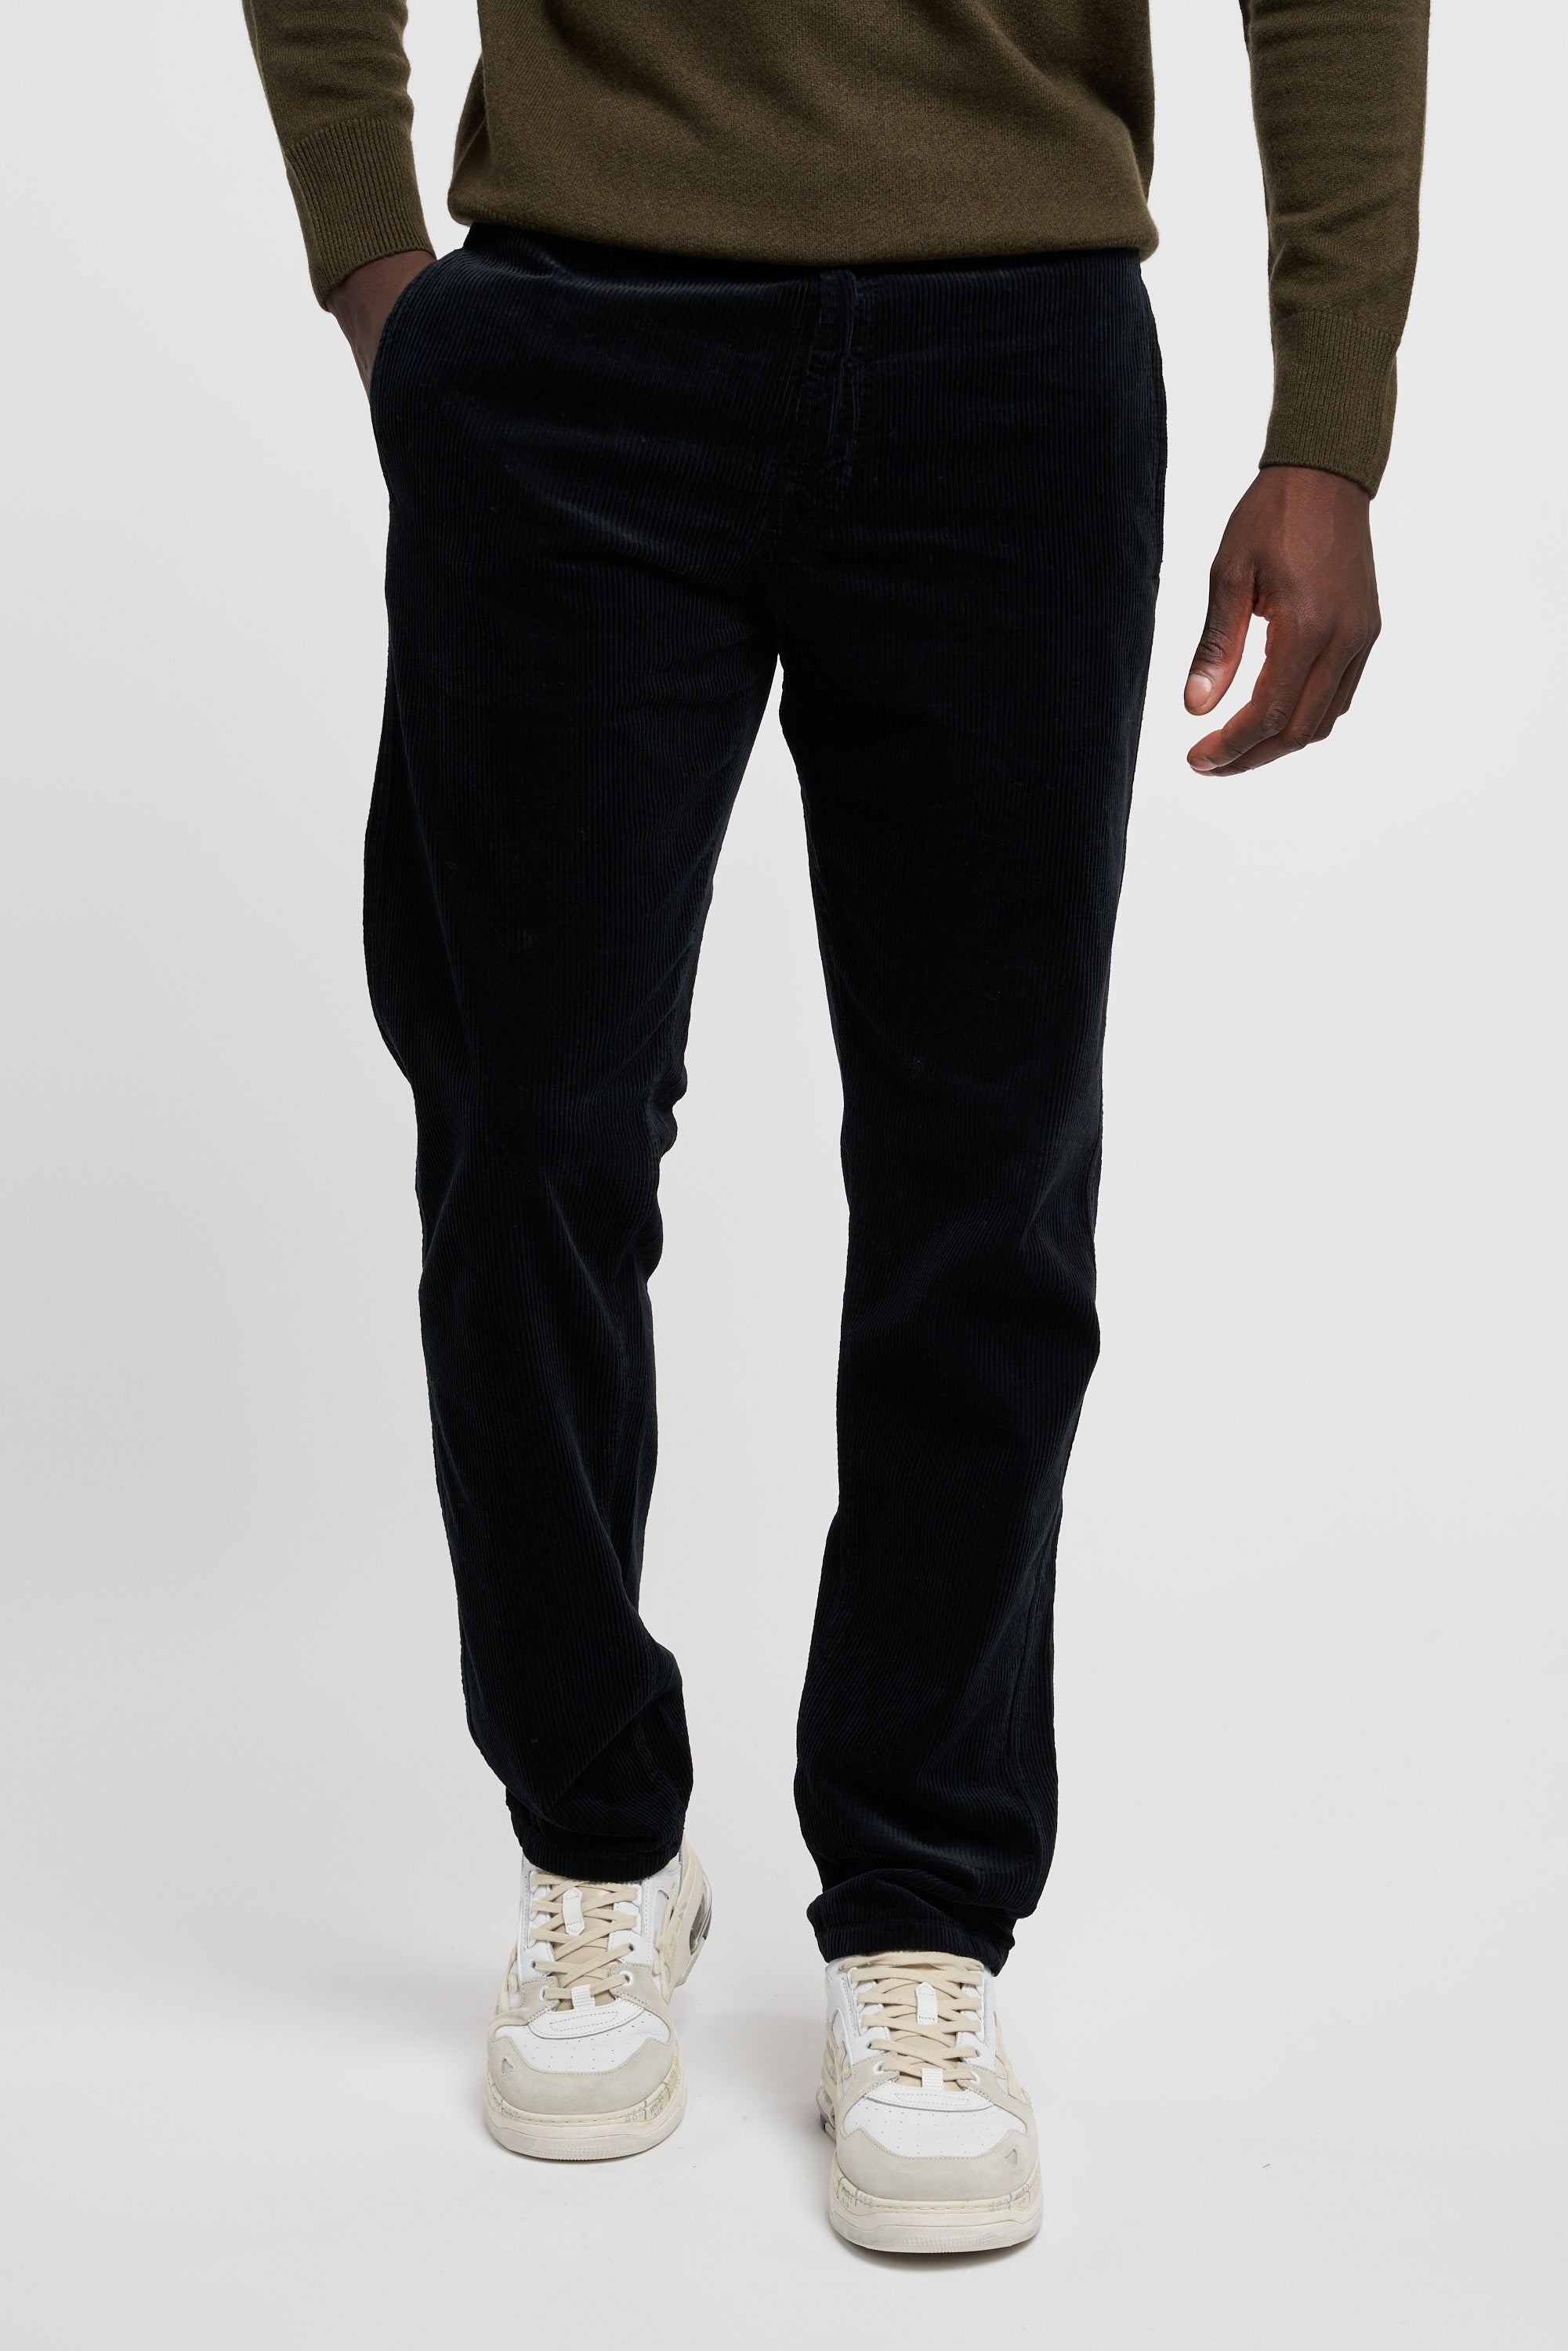 Aspesi Chino Trousers in Black Corduroy-1